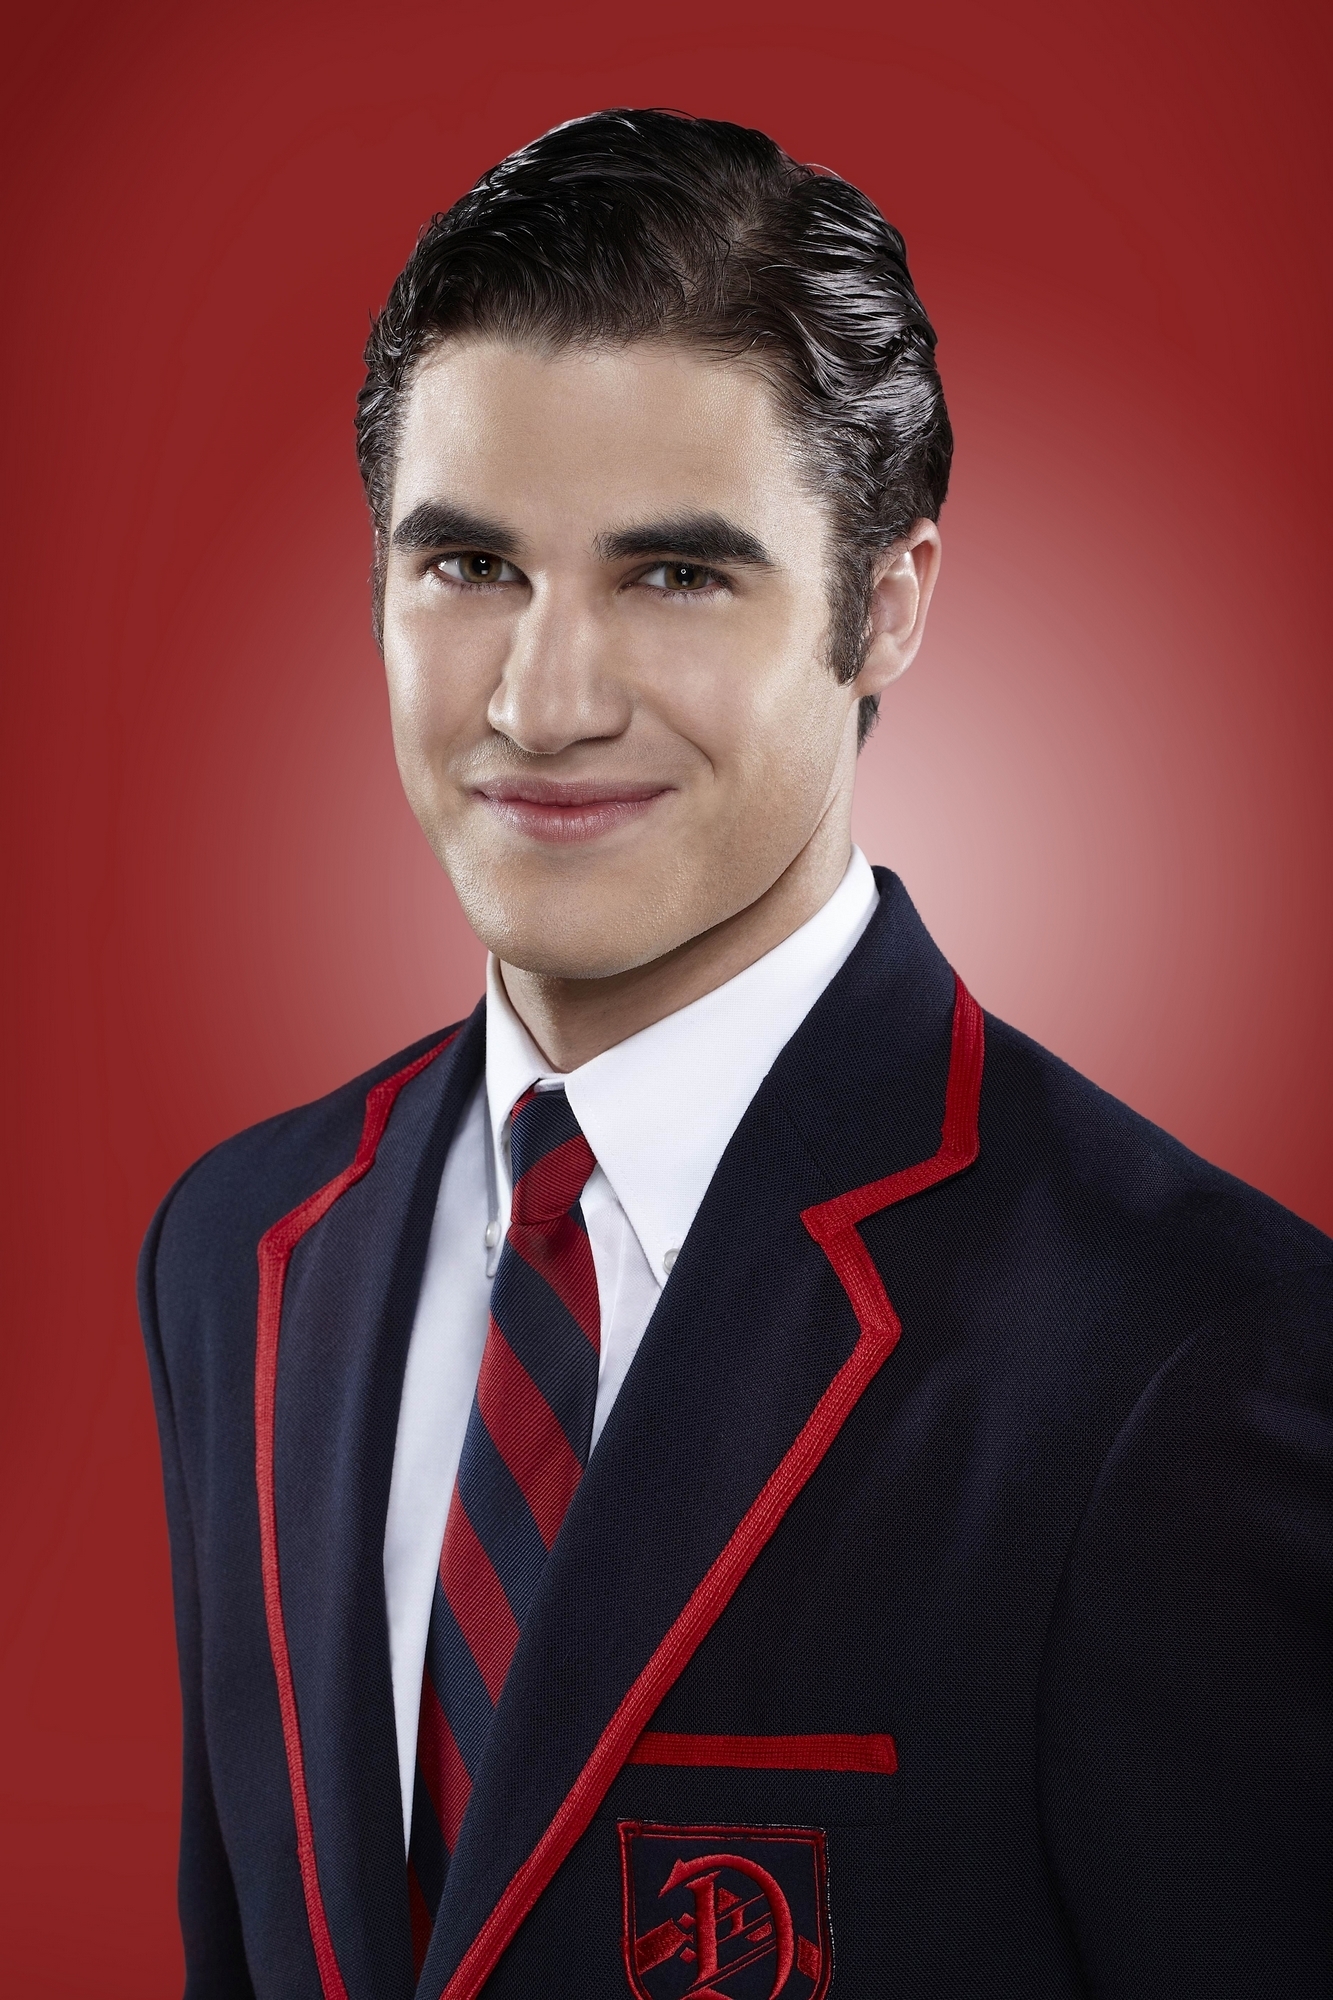 Darren Criss in Glee